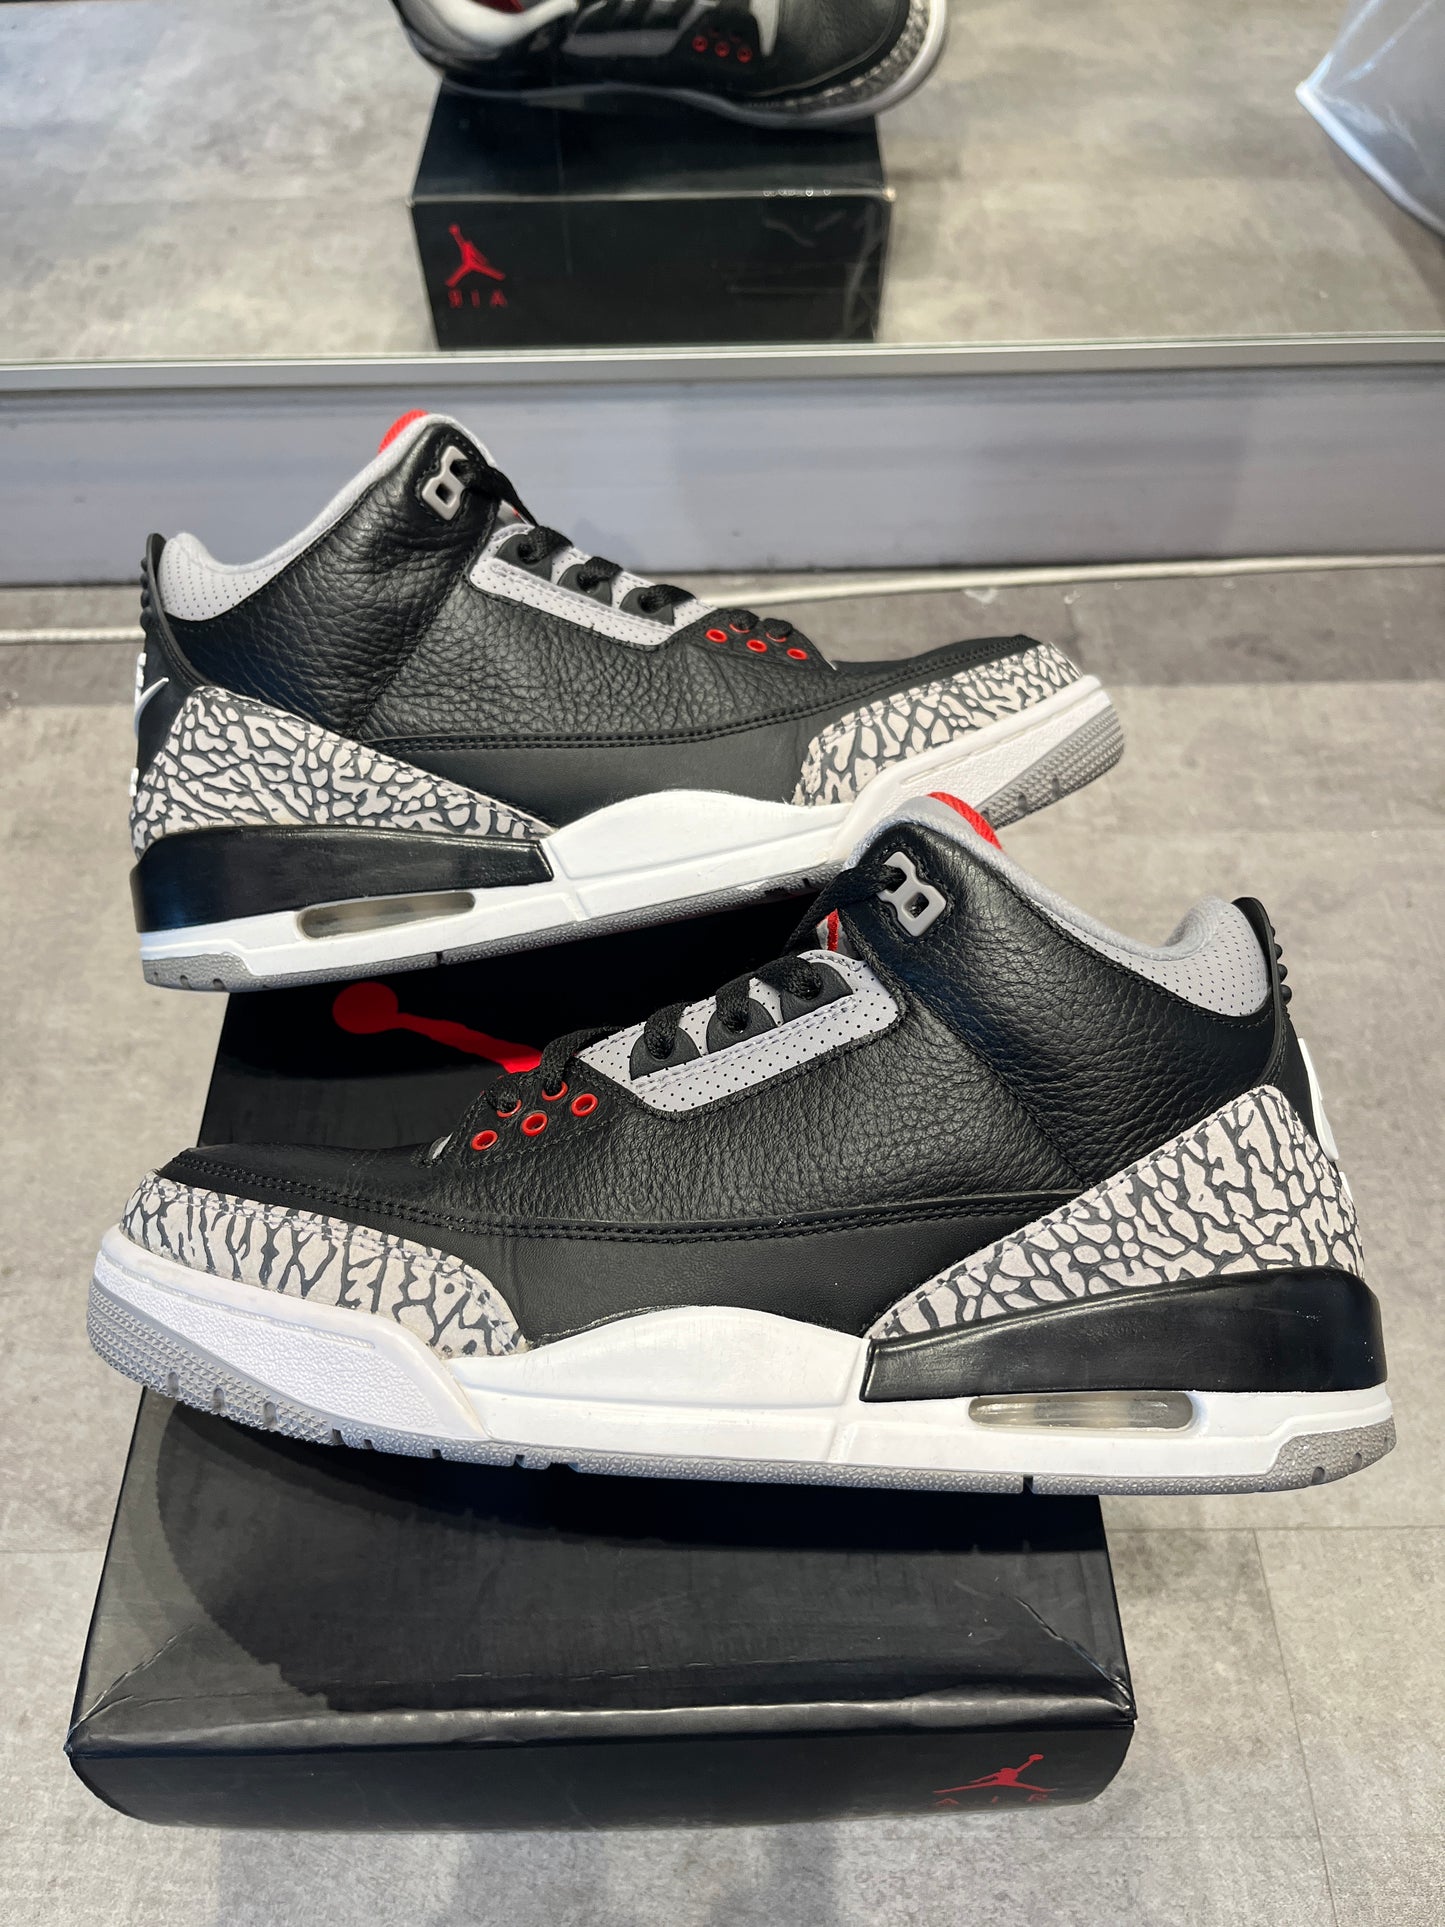 Jordan 3 Retro Black Cement (2018) (Preowned Size 9)